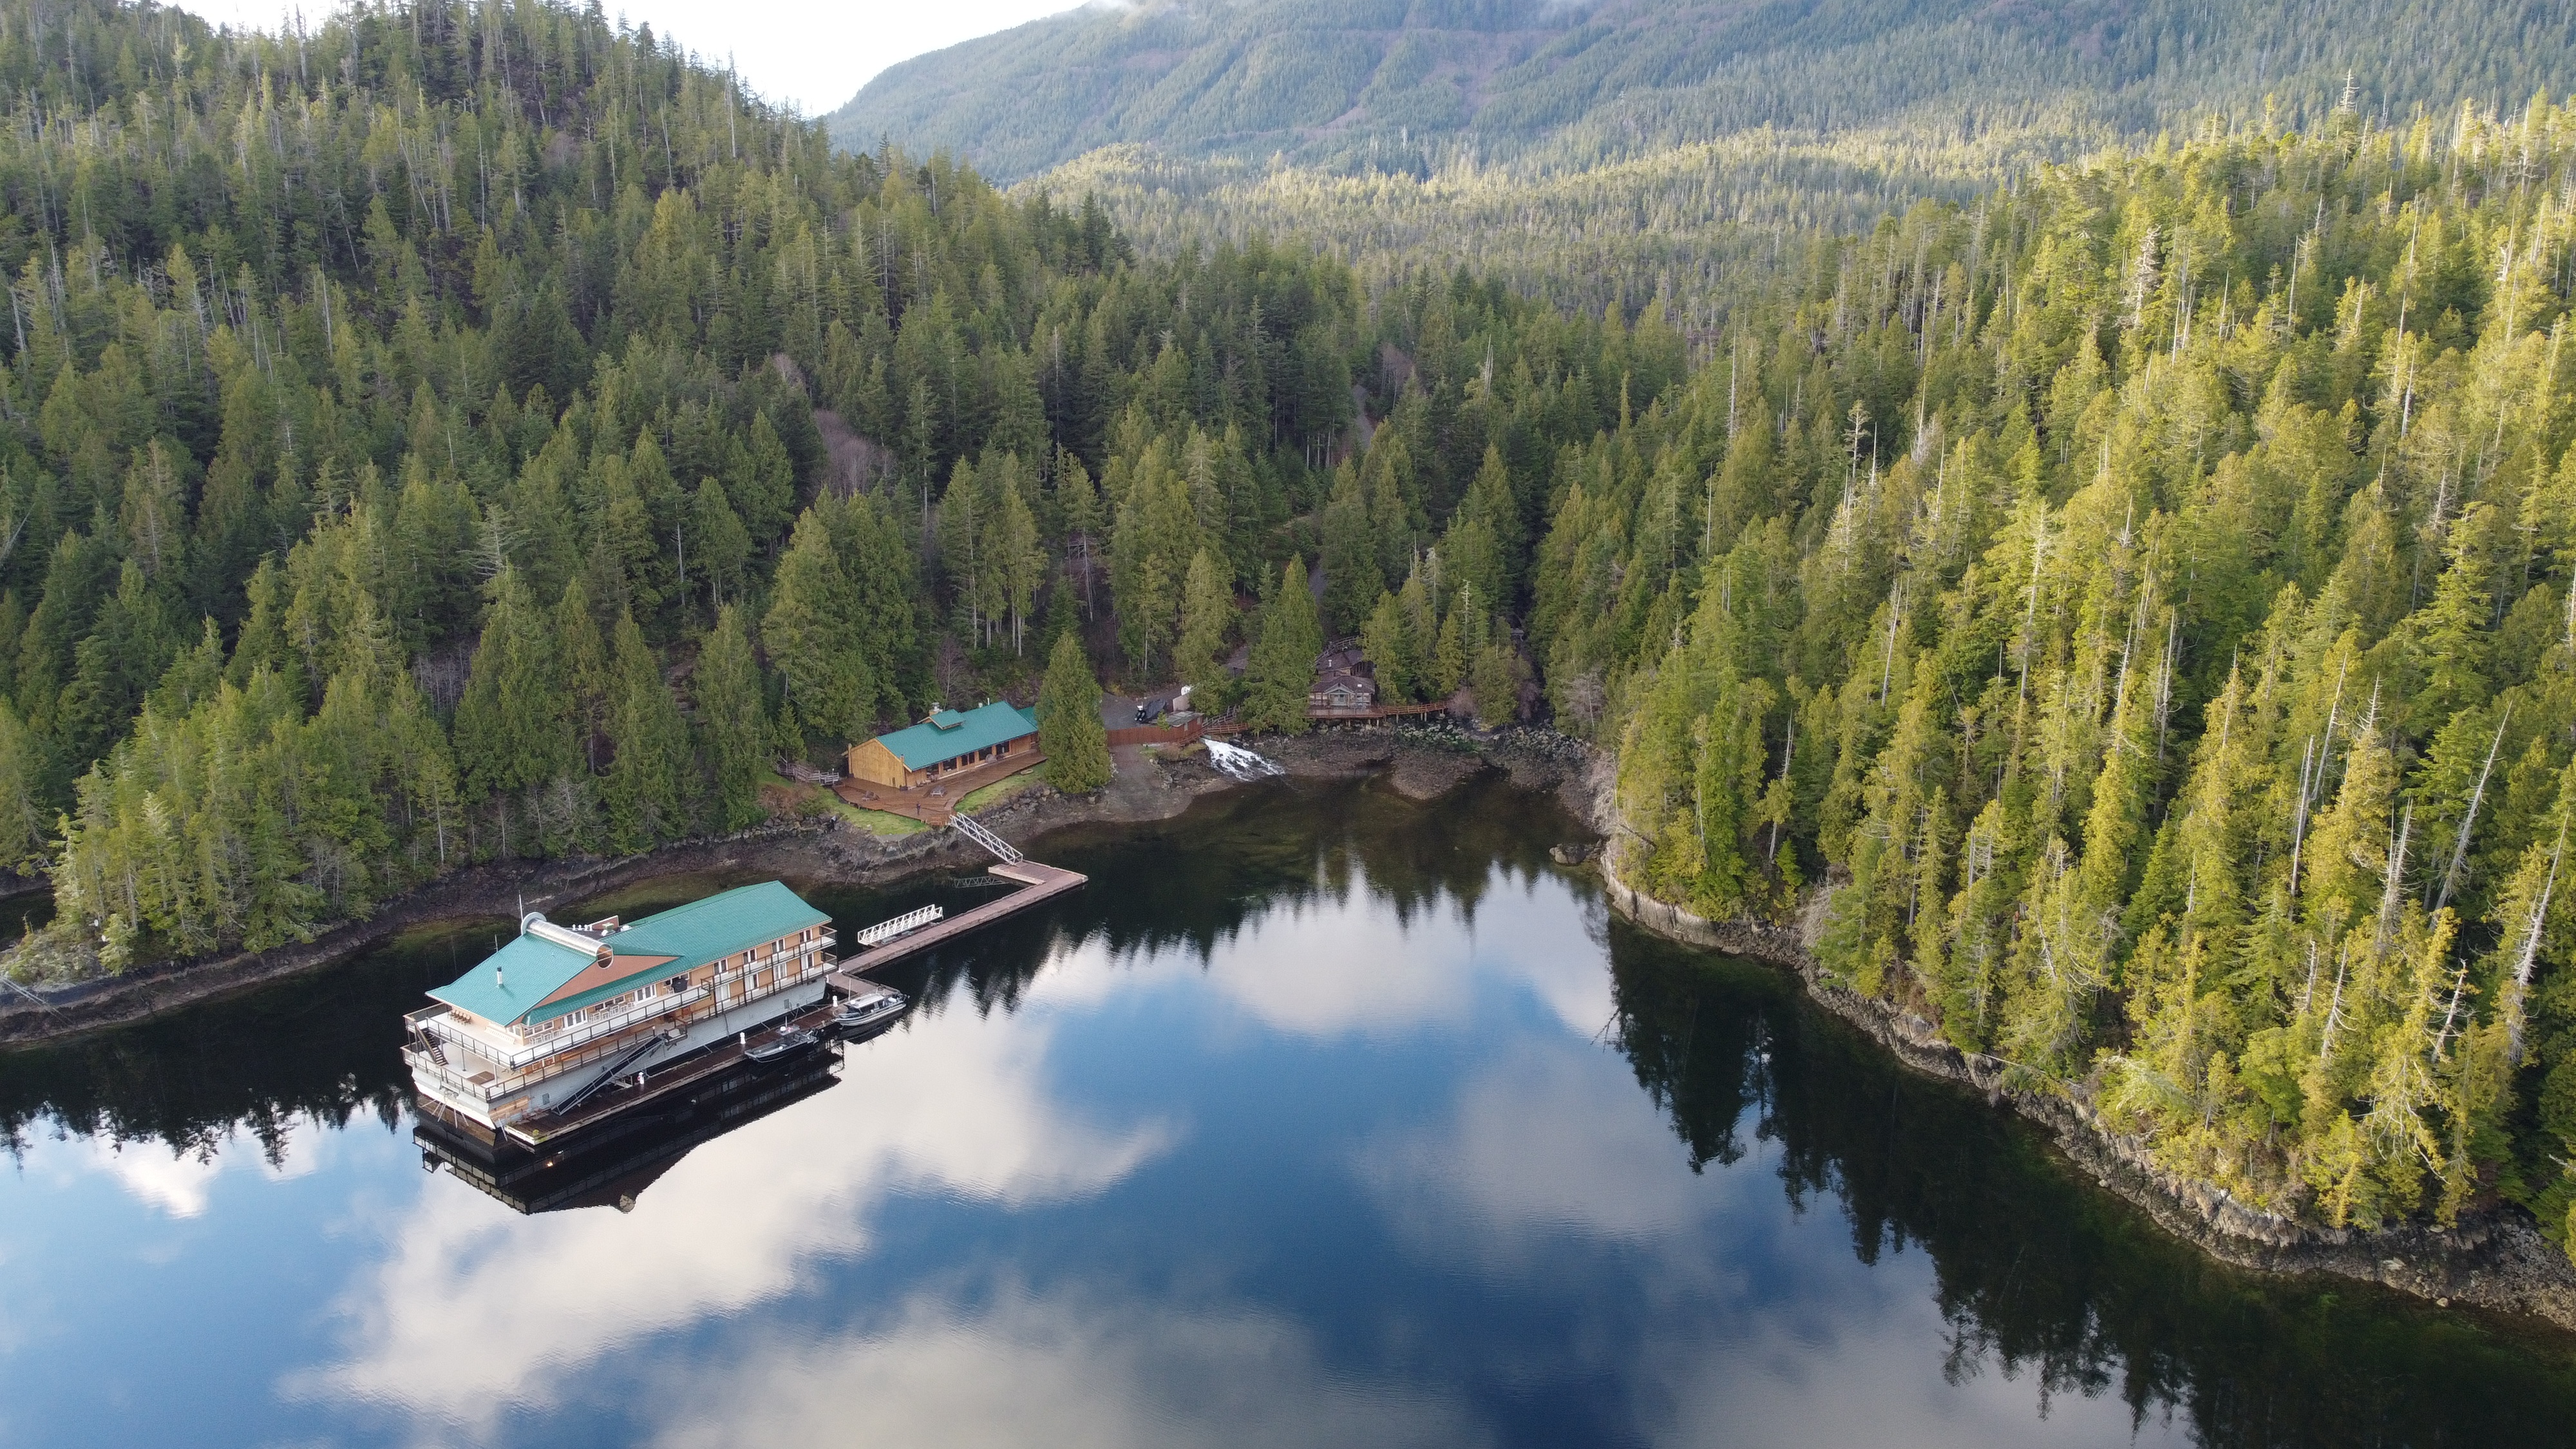 Tofino Wilderness Resort Quait Bay, Clayoquot Sound, British Columbia